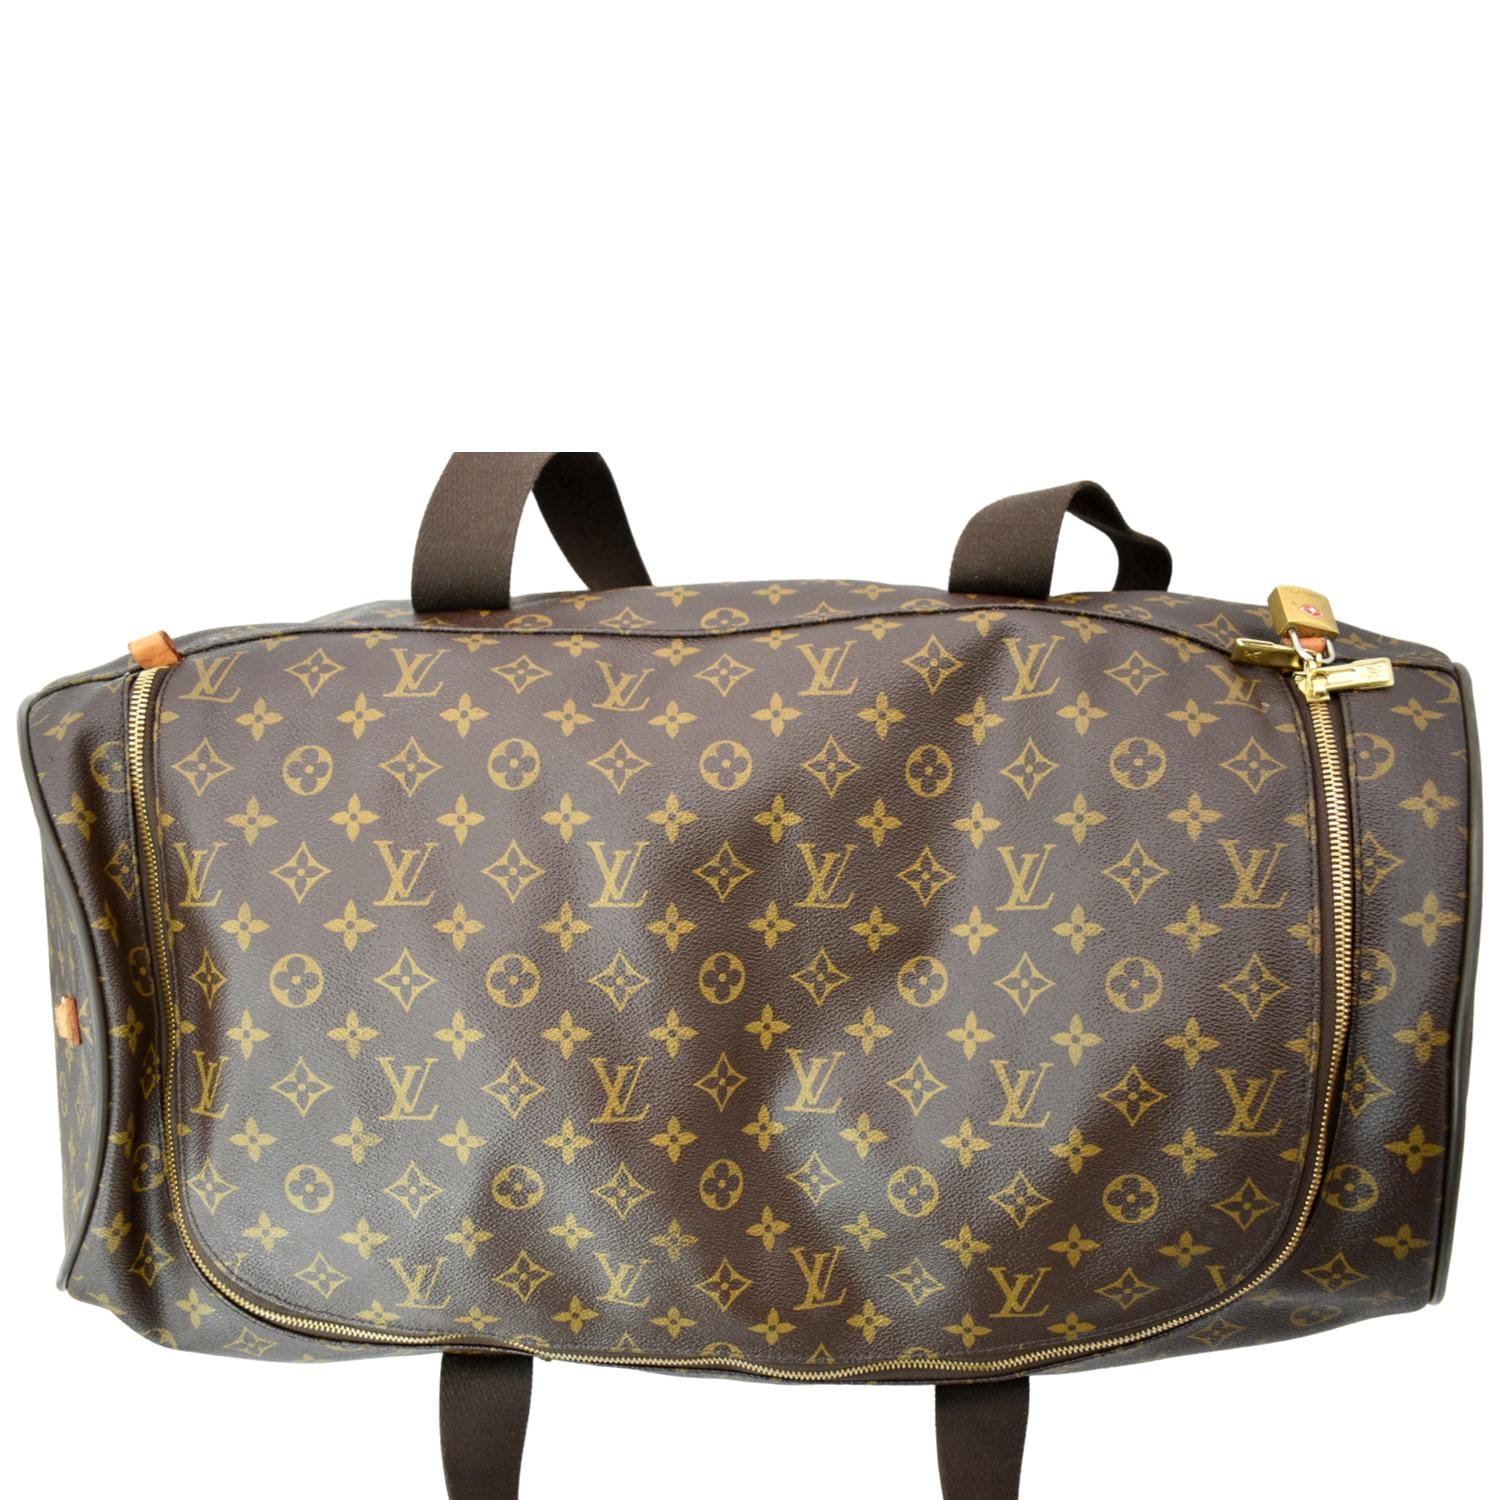 Louis Vuitton Duffel GM Weekender Beaubourg Boston Travel Bag With Strap